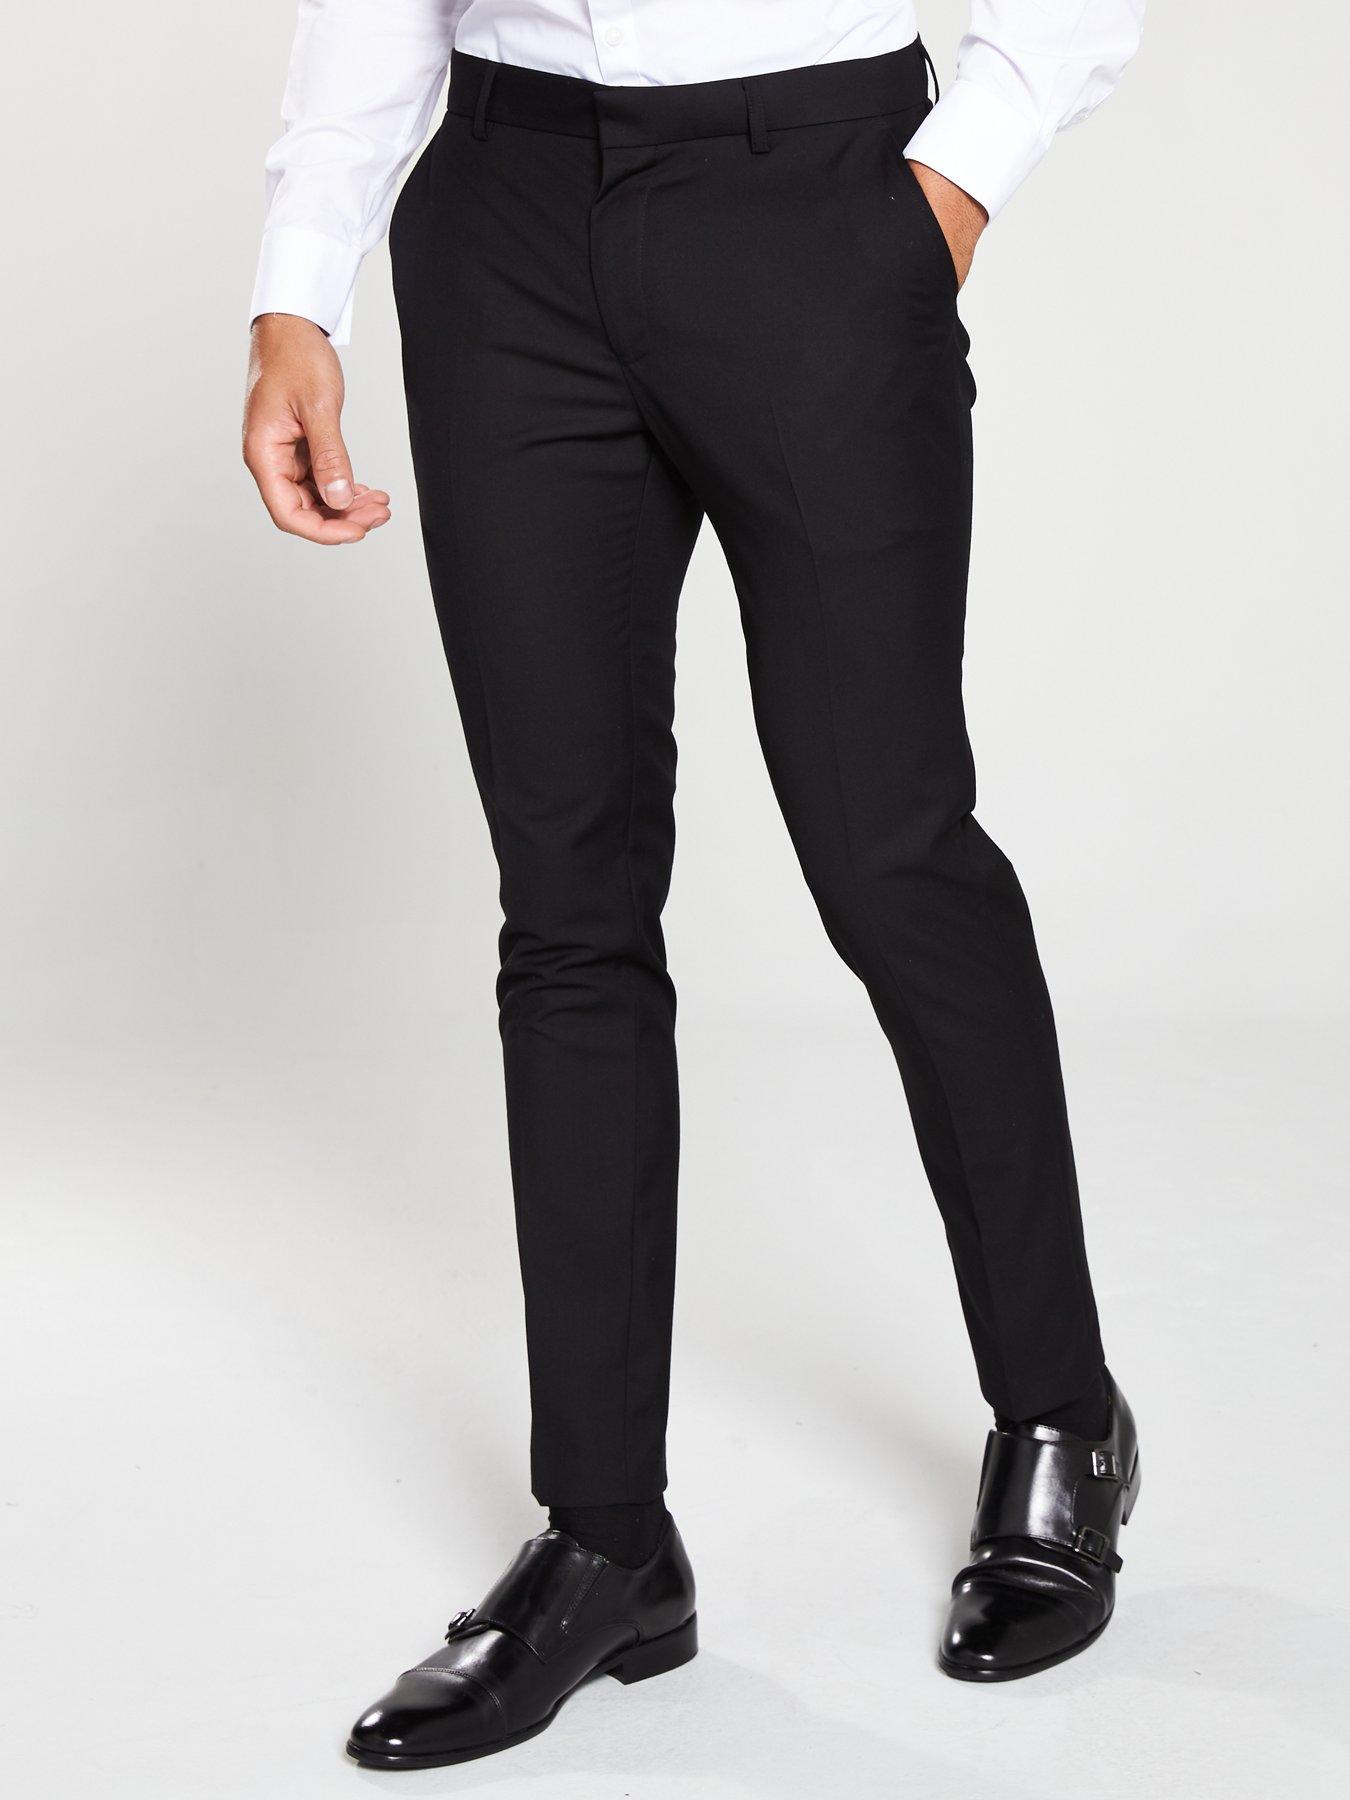 long black skinny trousers